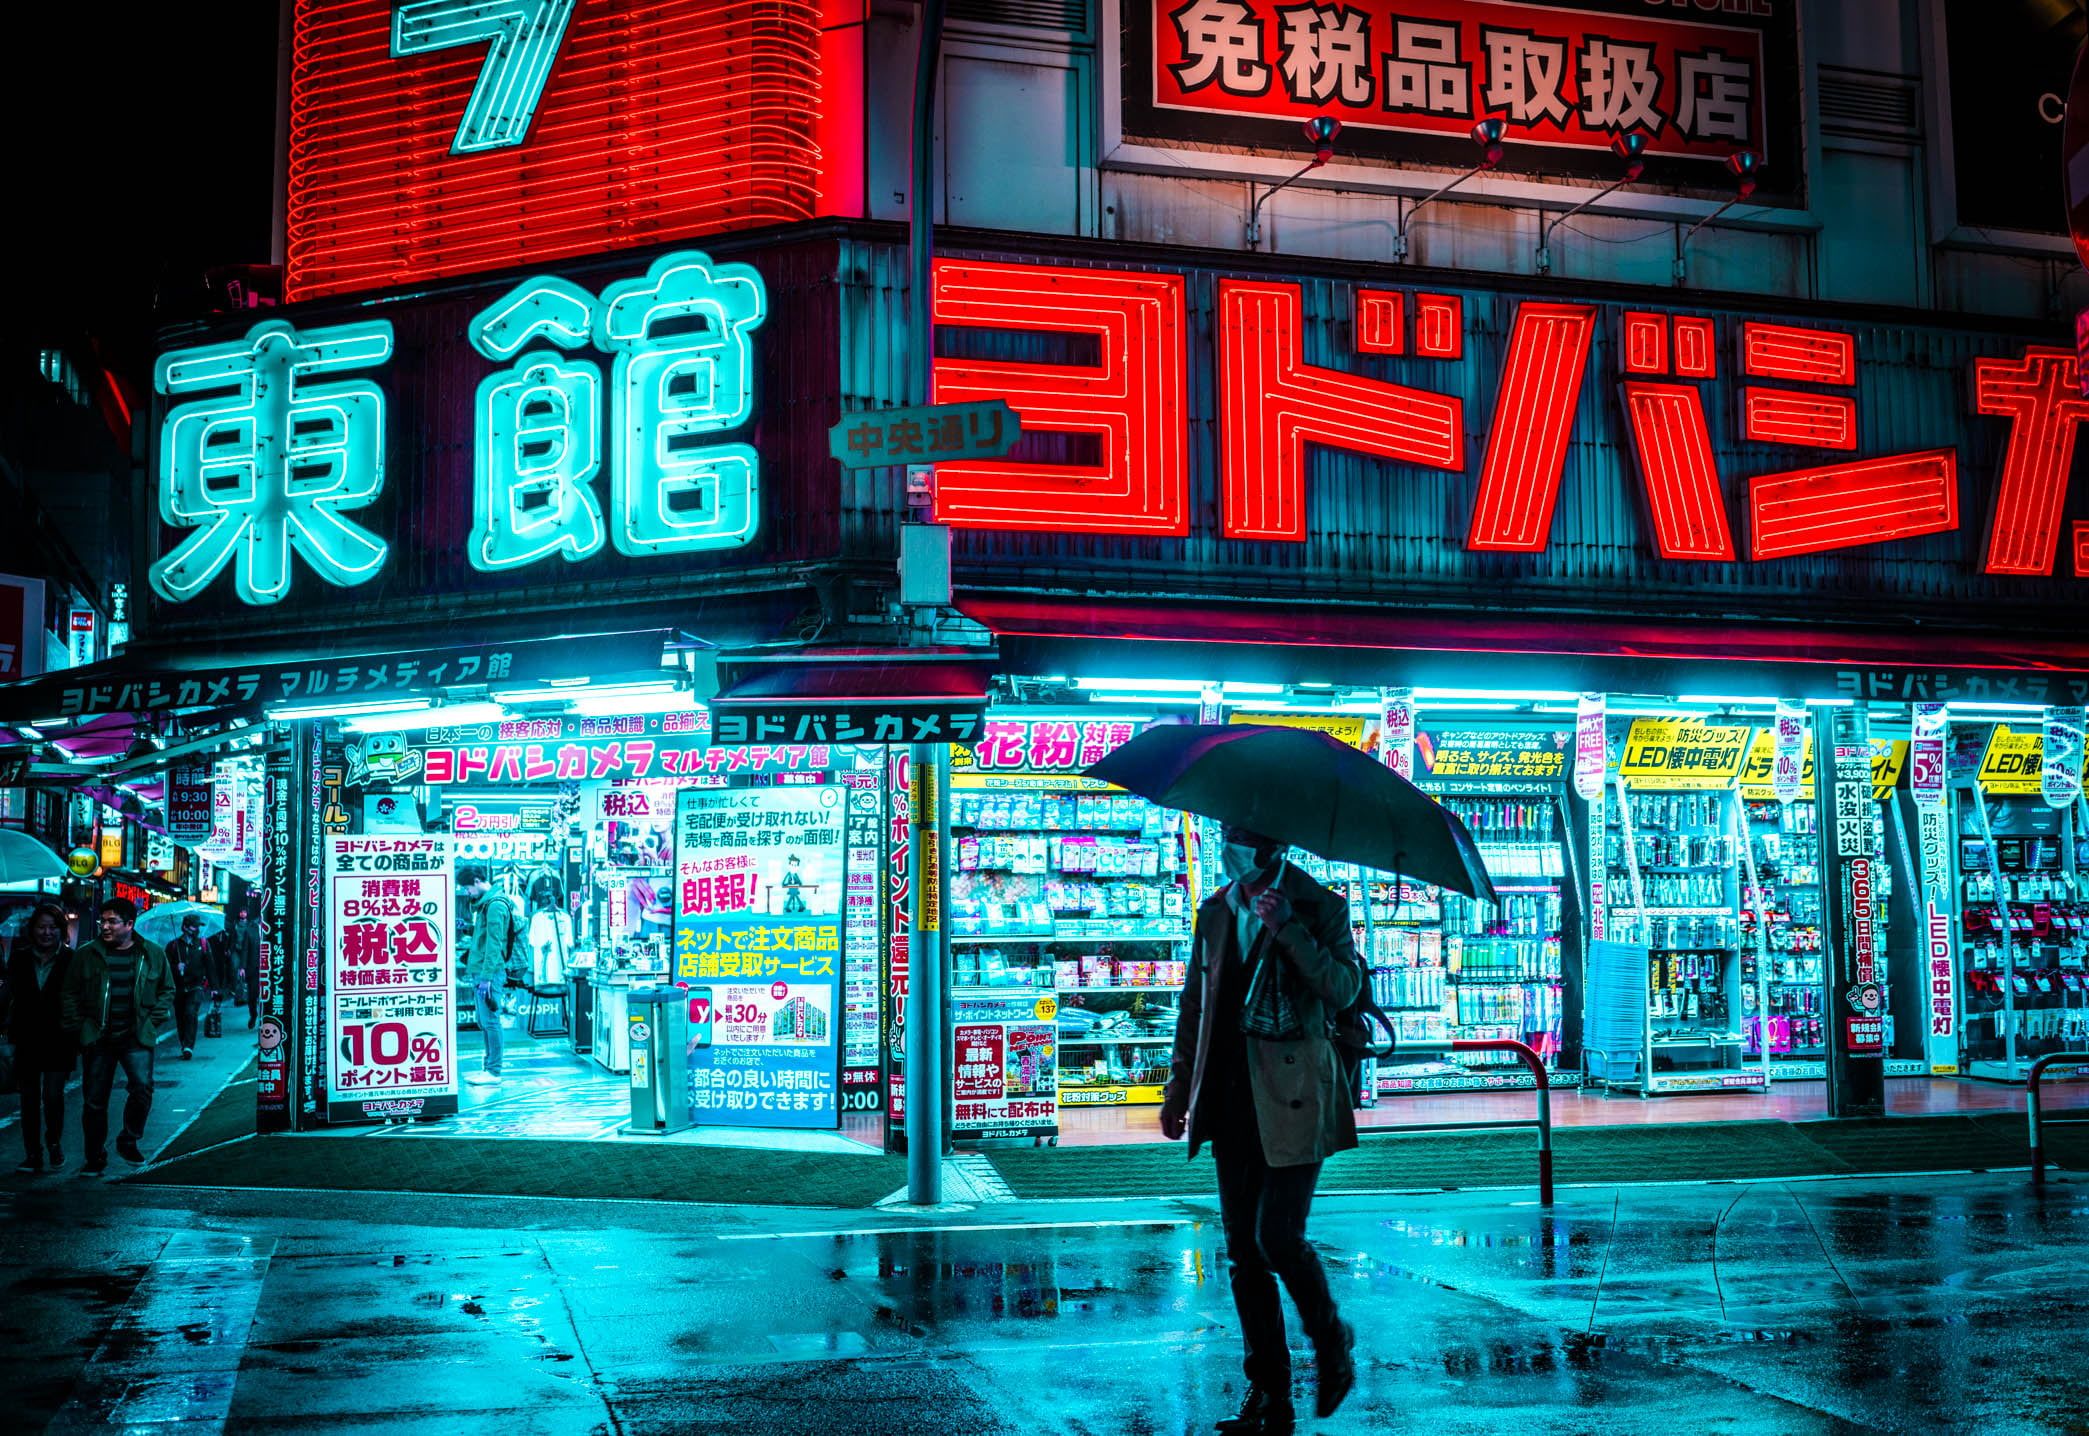 Neon Tokyo Wallpaper